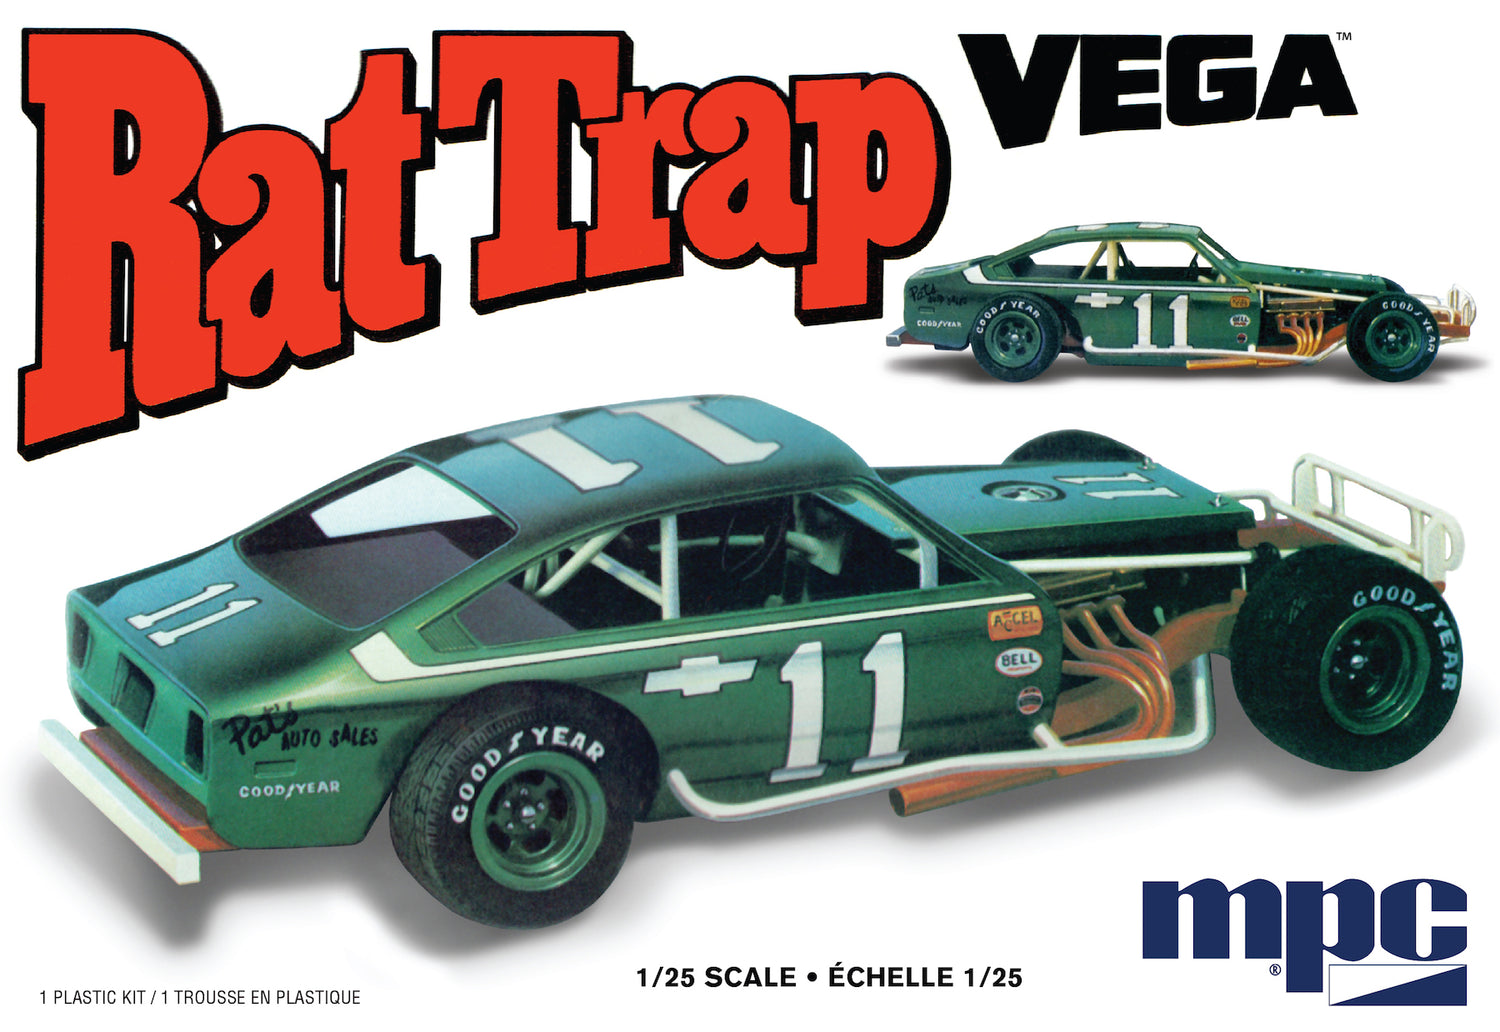 MPC 905 1974 Chevy Vega Modified “Rat Trap” 1/25 Scale Model Kit